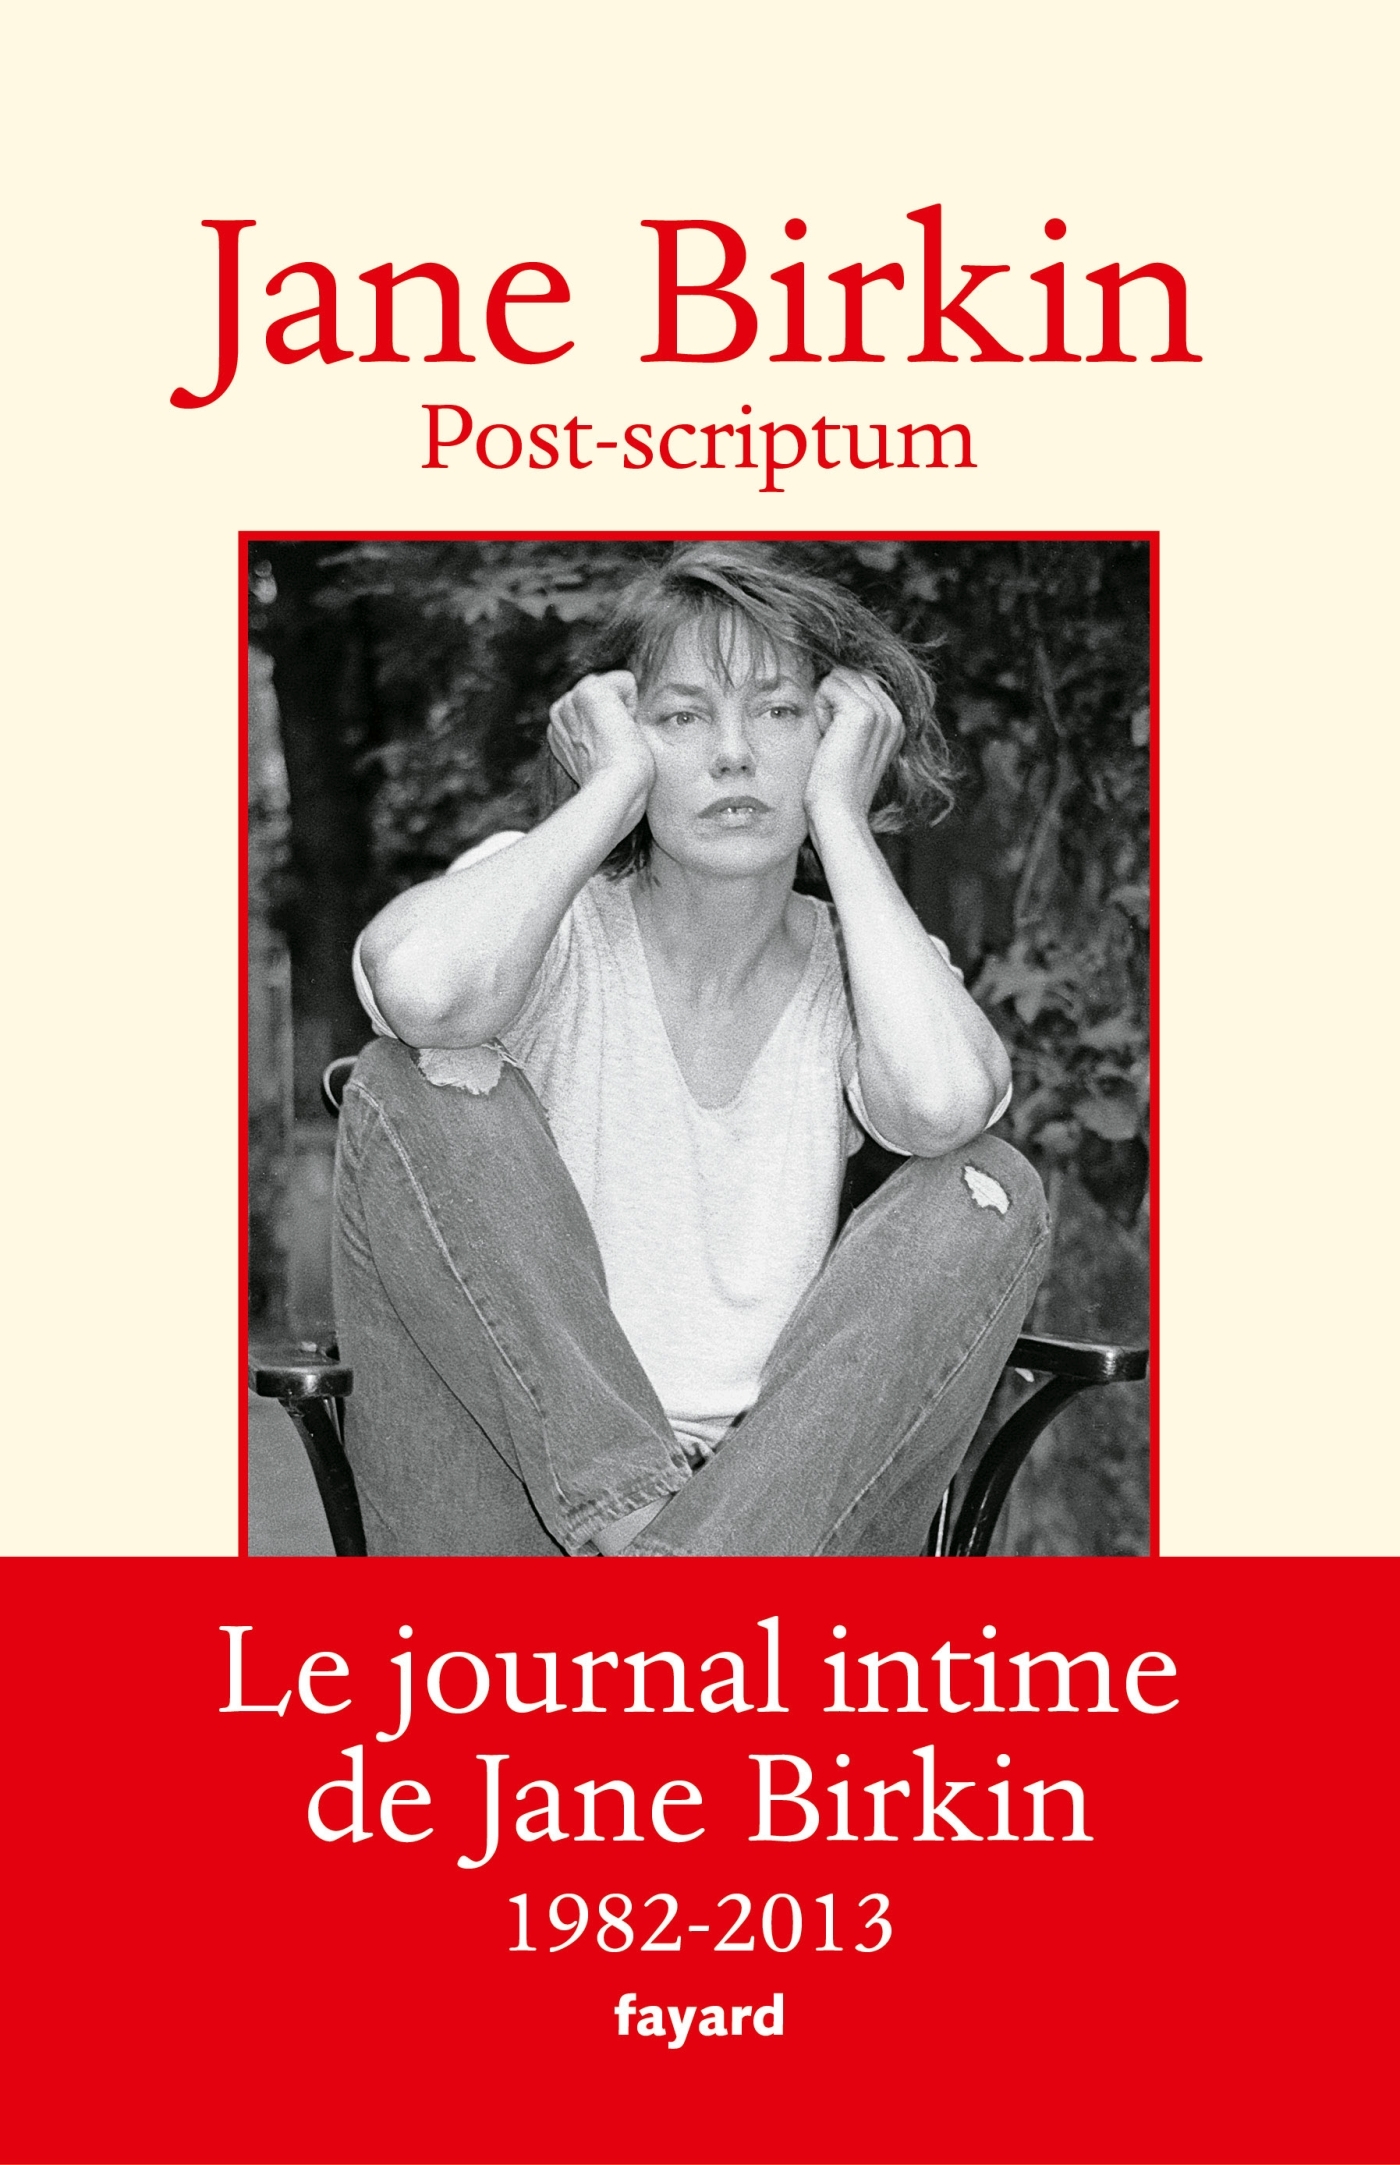 Post-scriptum, Le journal intime de Jane Birkin 1982-2013 (9782213711997-front-cover)